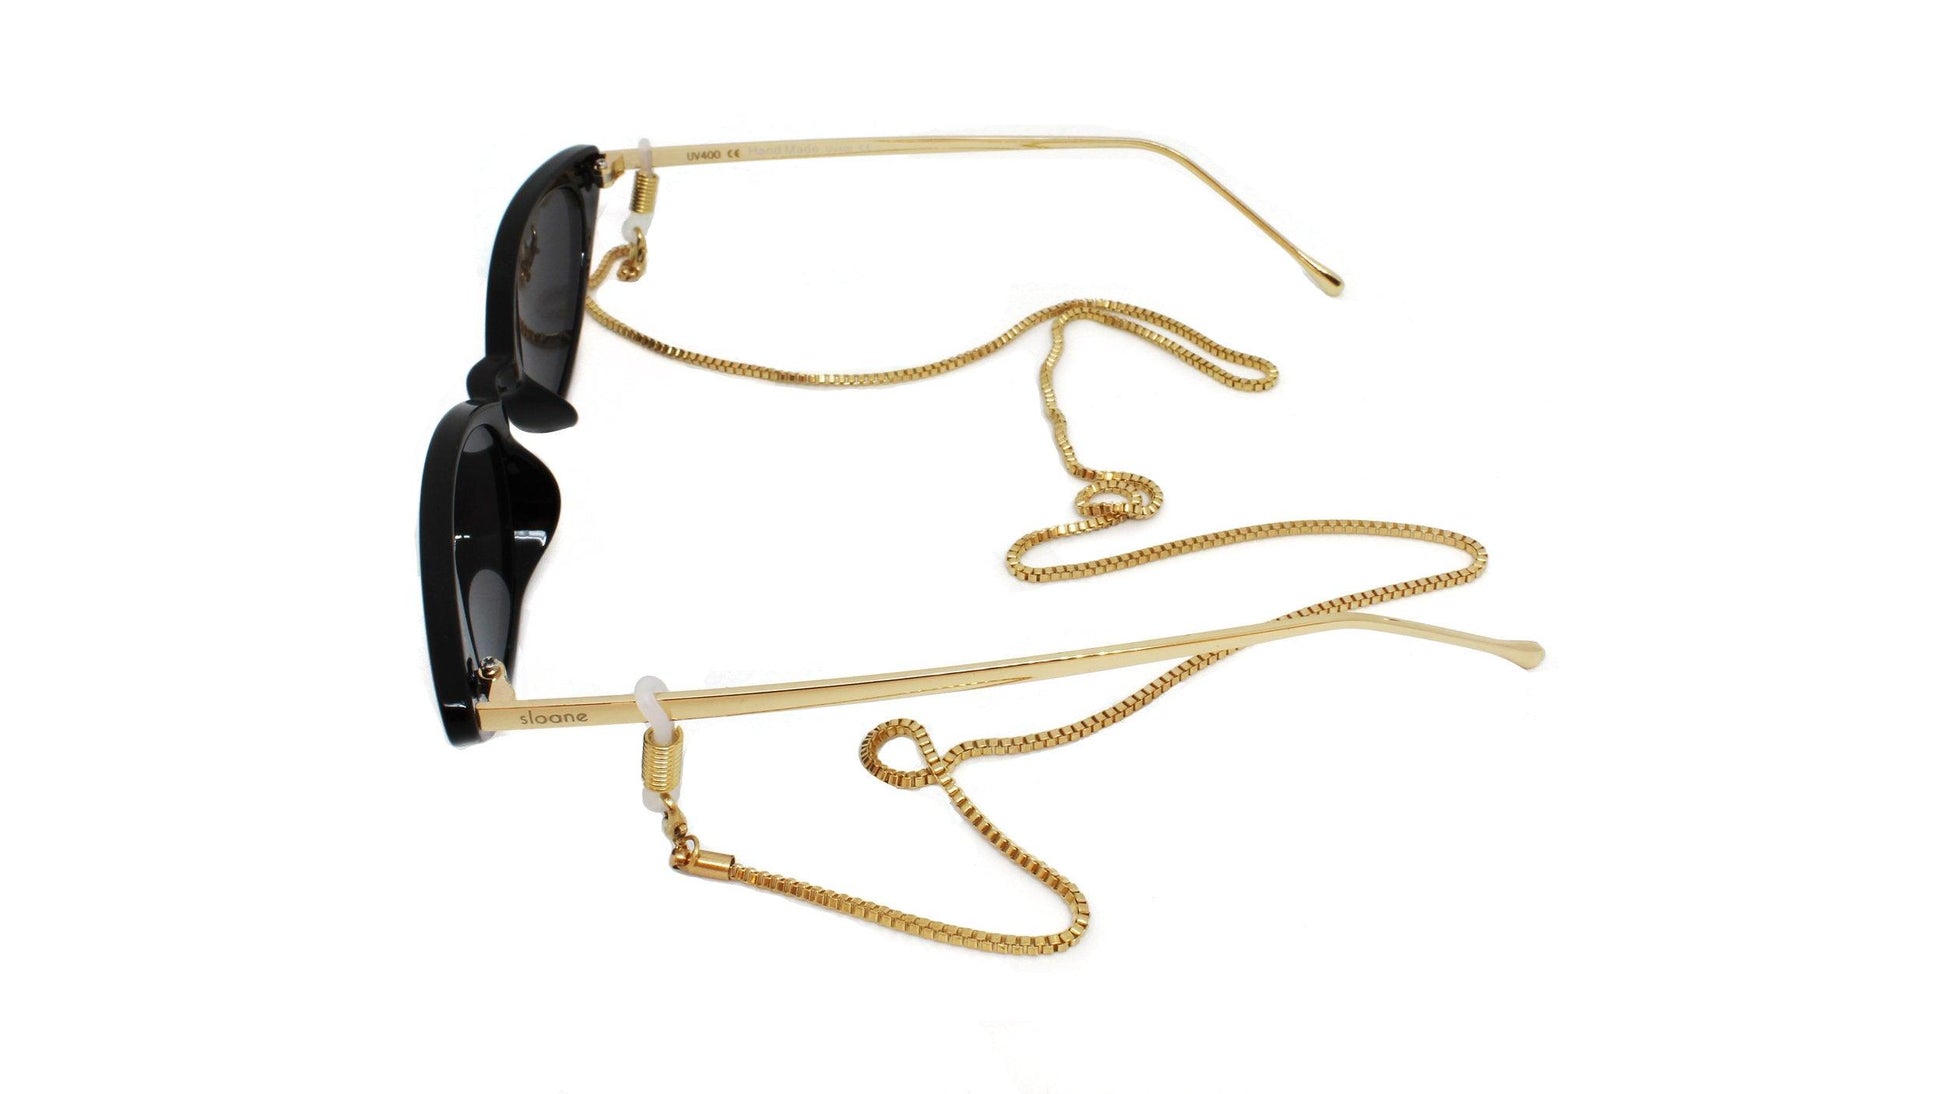 SUNGLASSES CHAIN - Gold/Box Link - SLOANE Eyewear